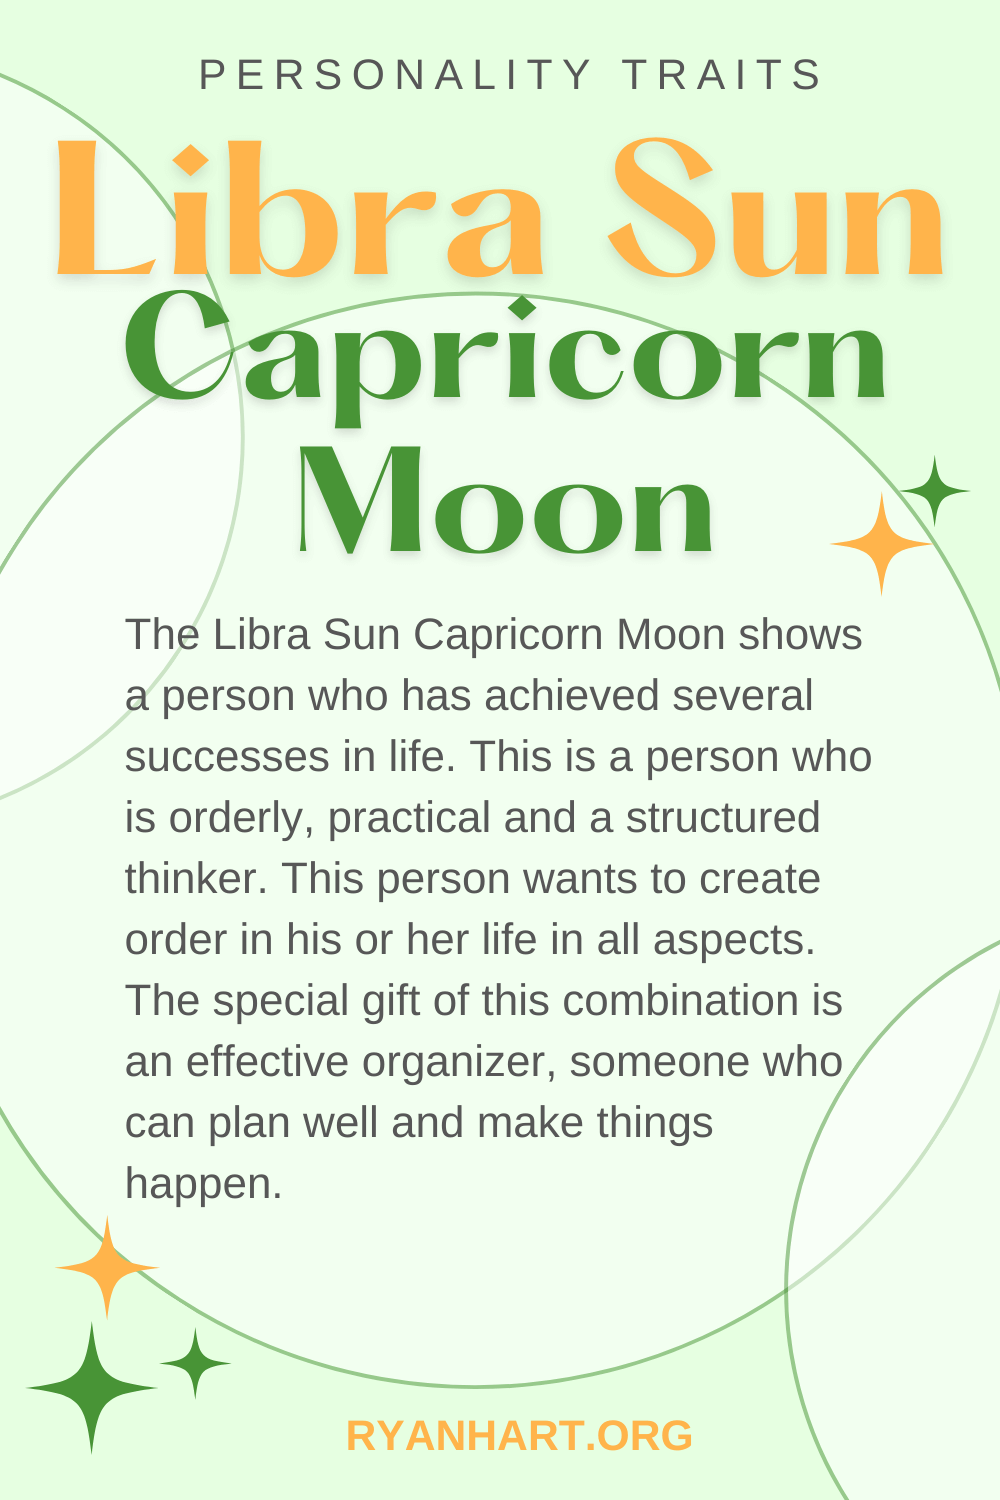 Libra Sun Capricorn Moon Description